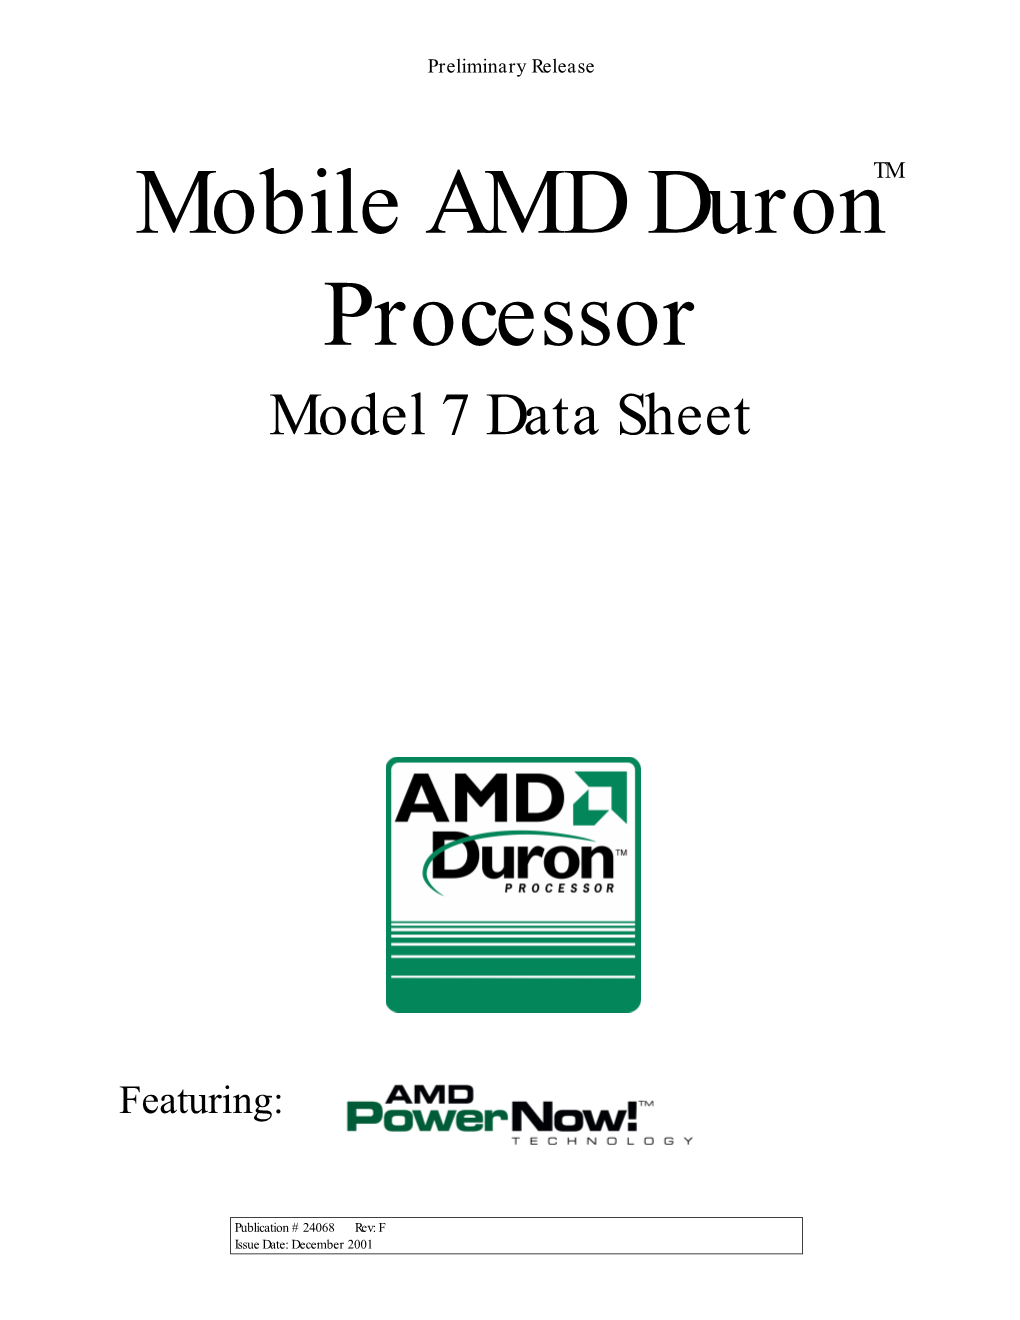 Mobile AMD Duron(Tm) Processor Model 7 Data Sheet